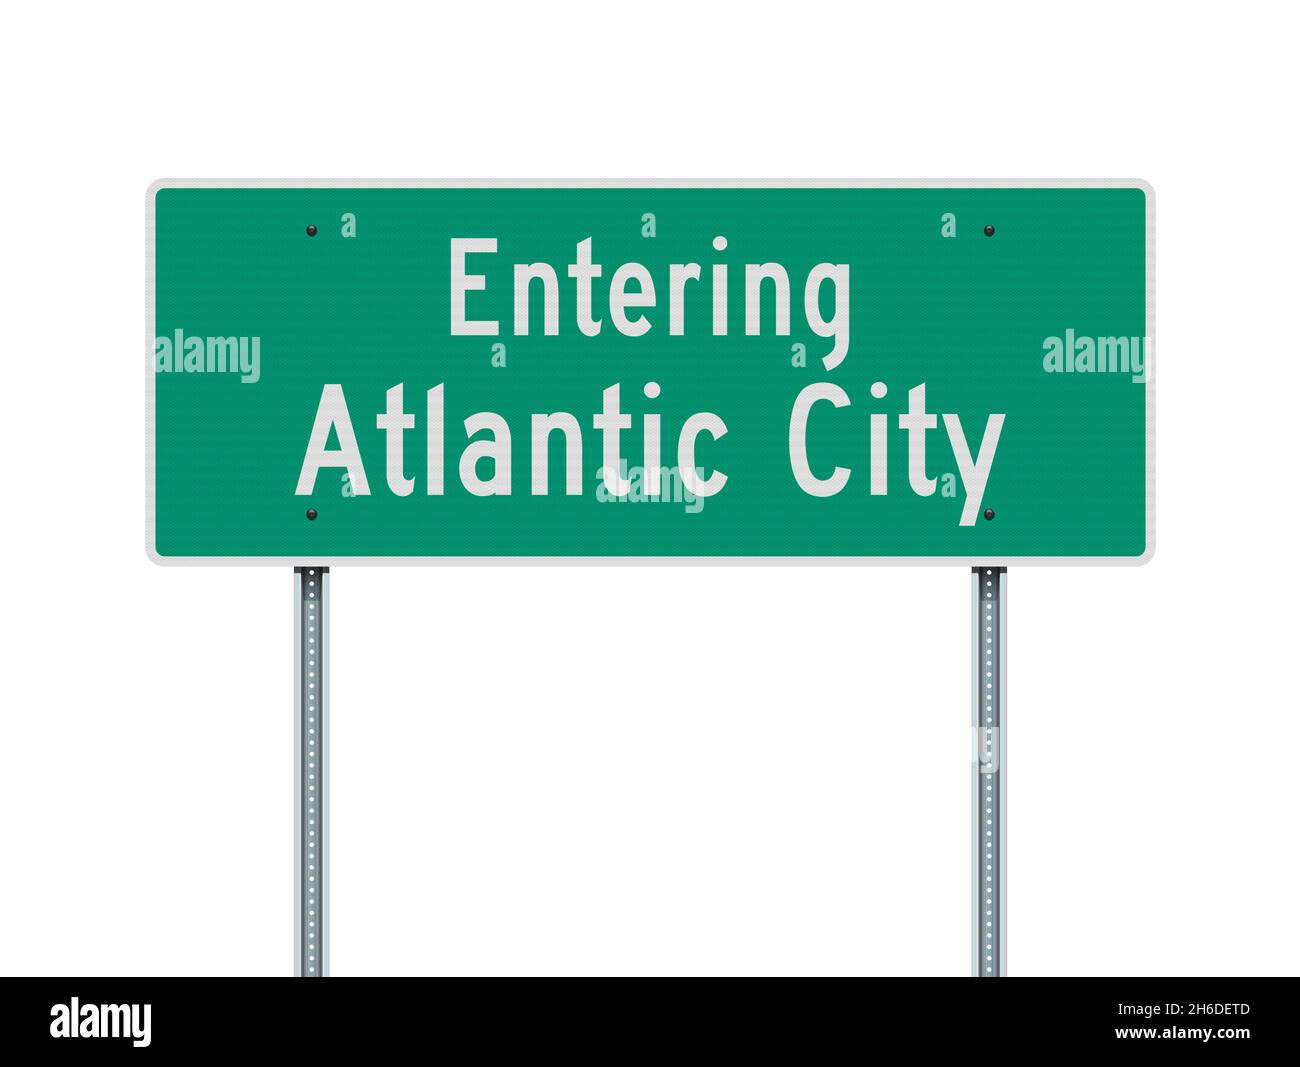 Vector illustration of the Atlantic City Entering green road sign on metallic posts Stock Vector